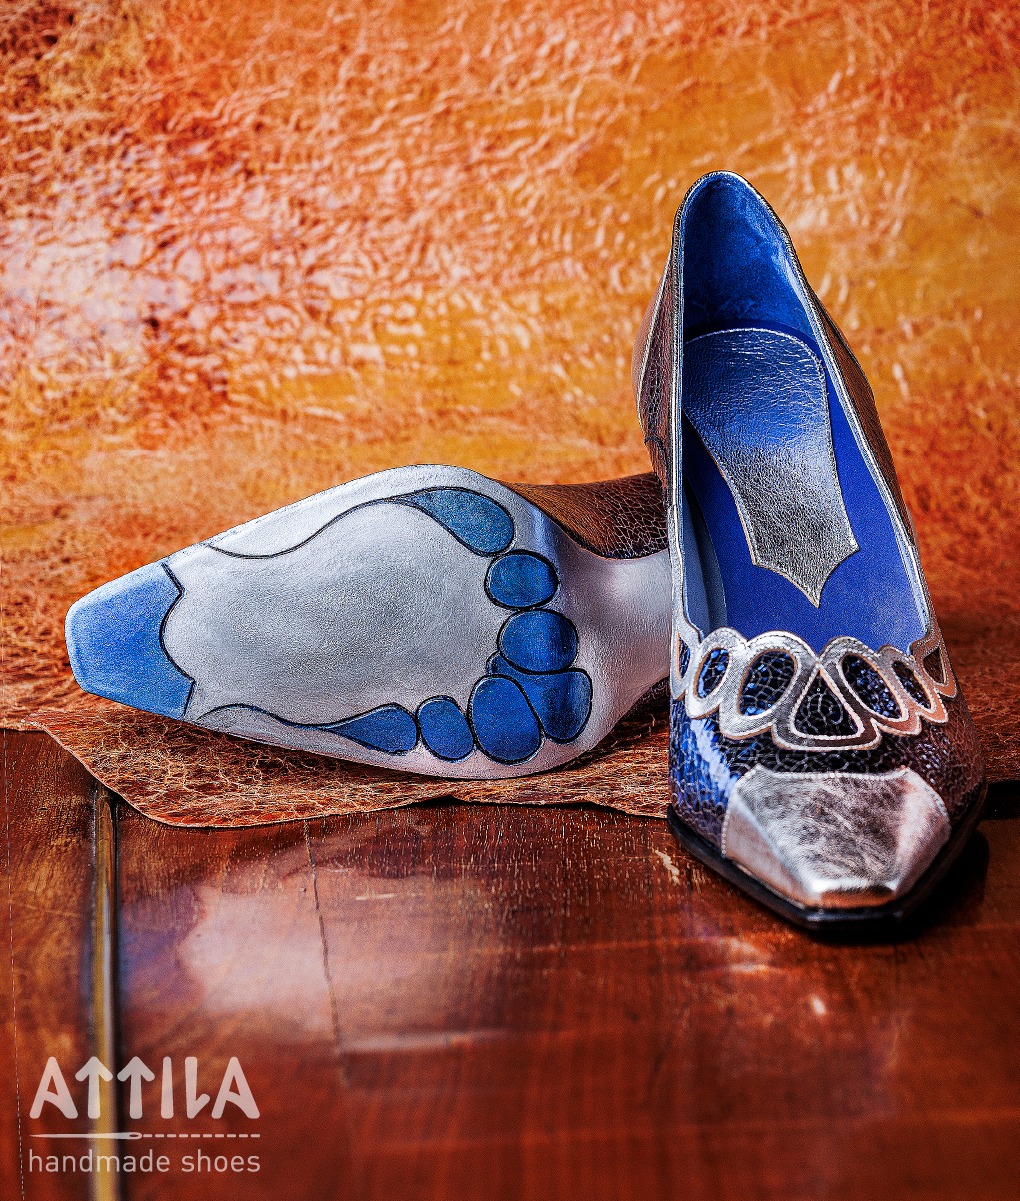 Facebook/ Attila Shoes